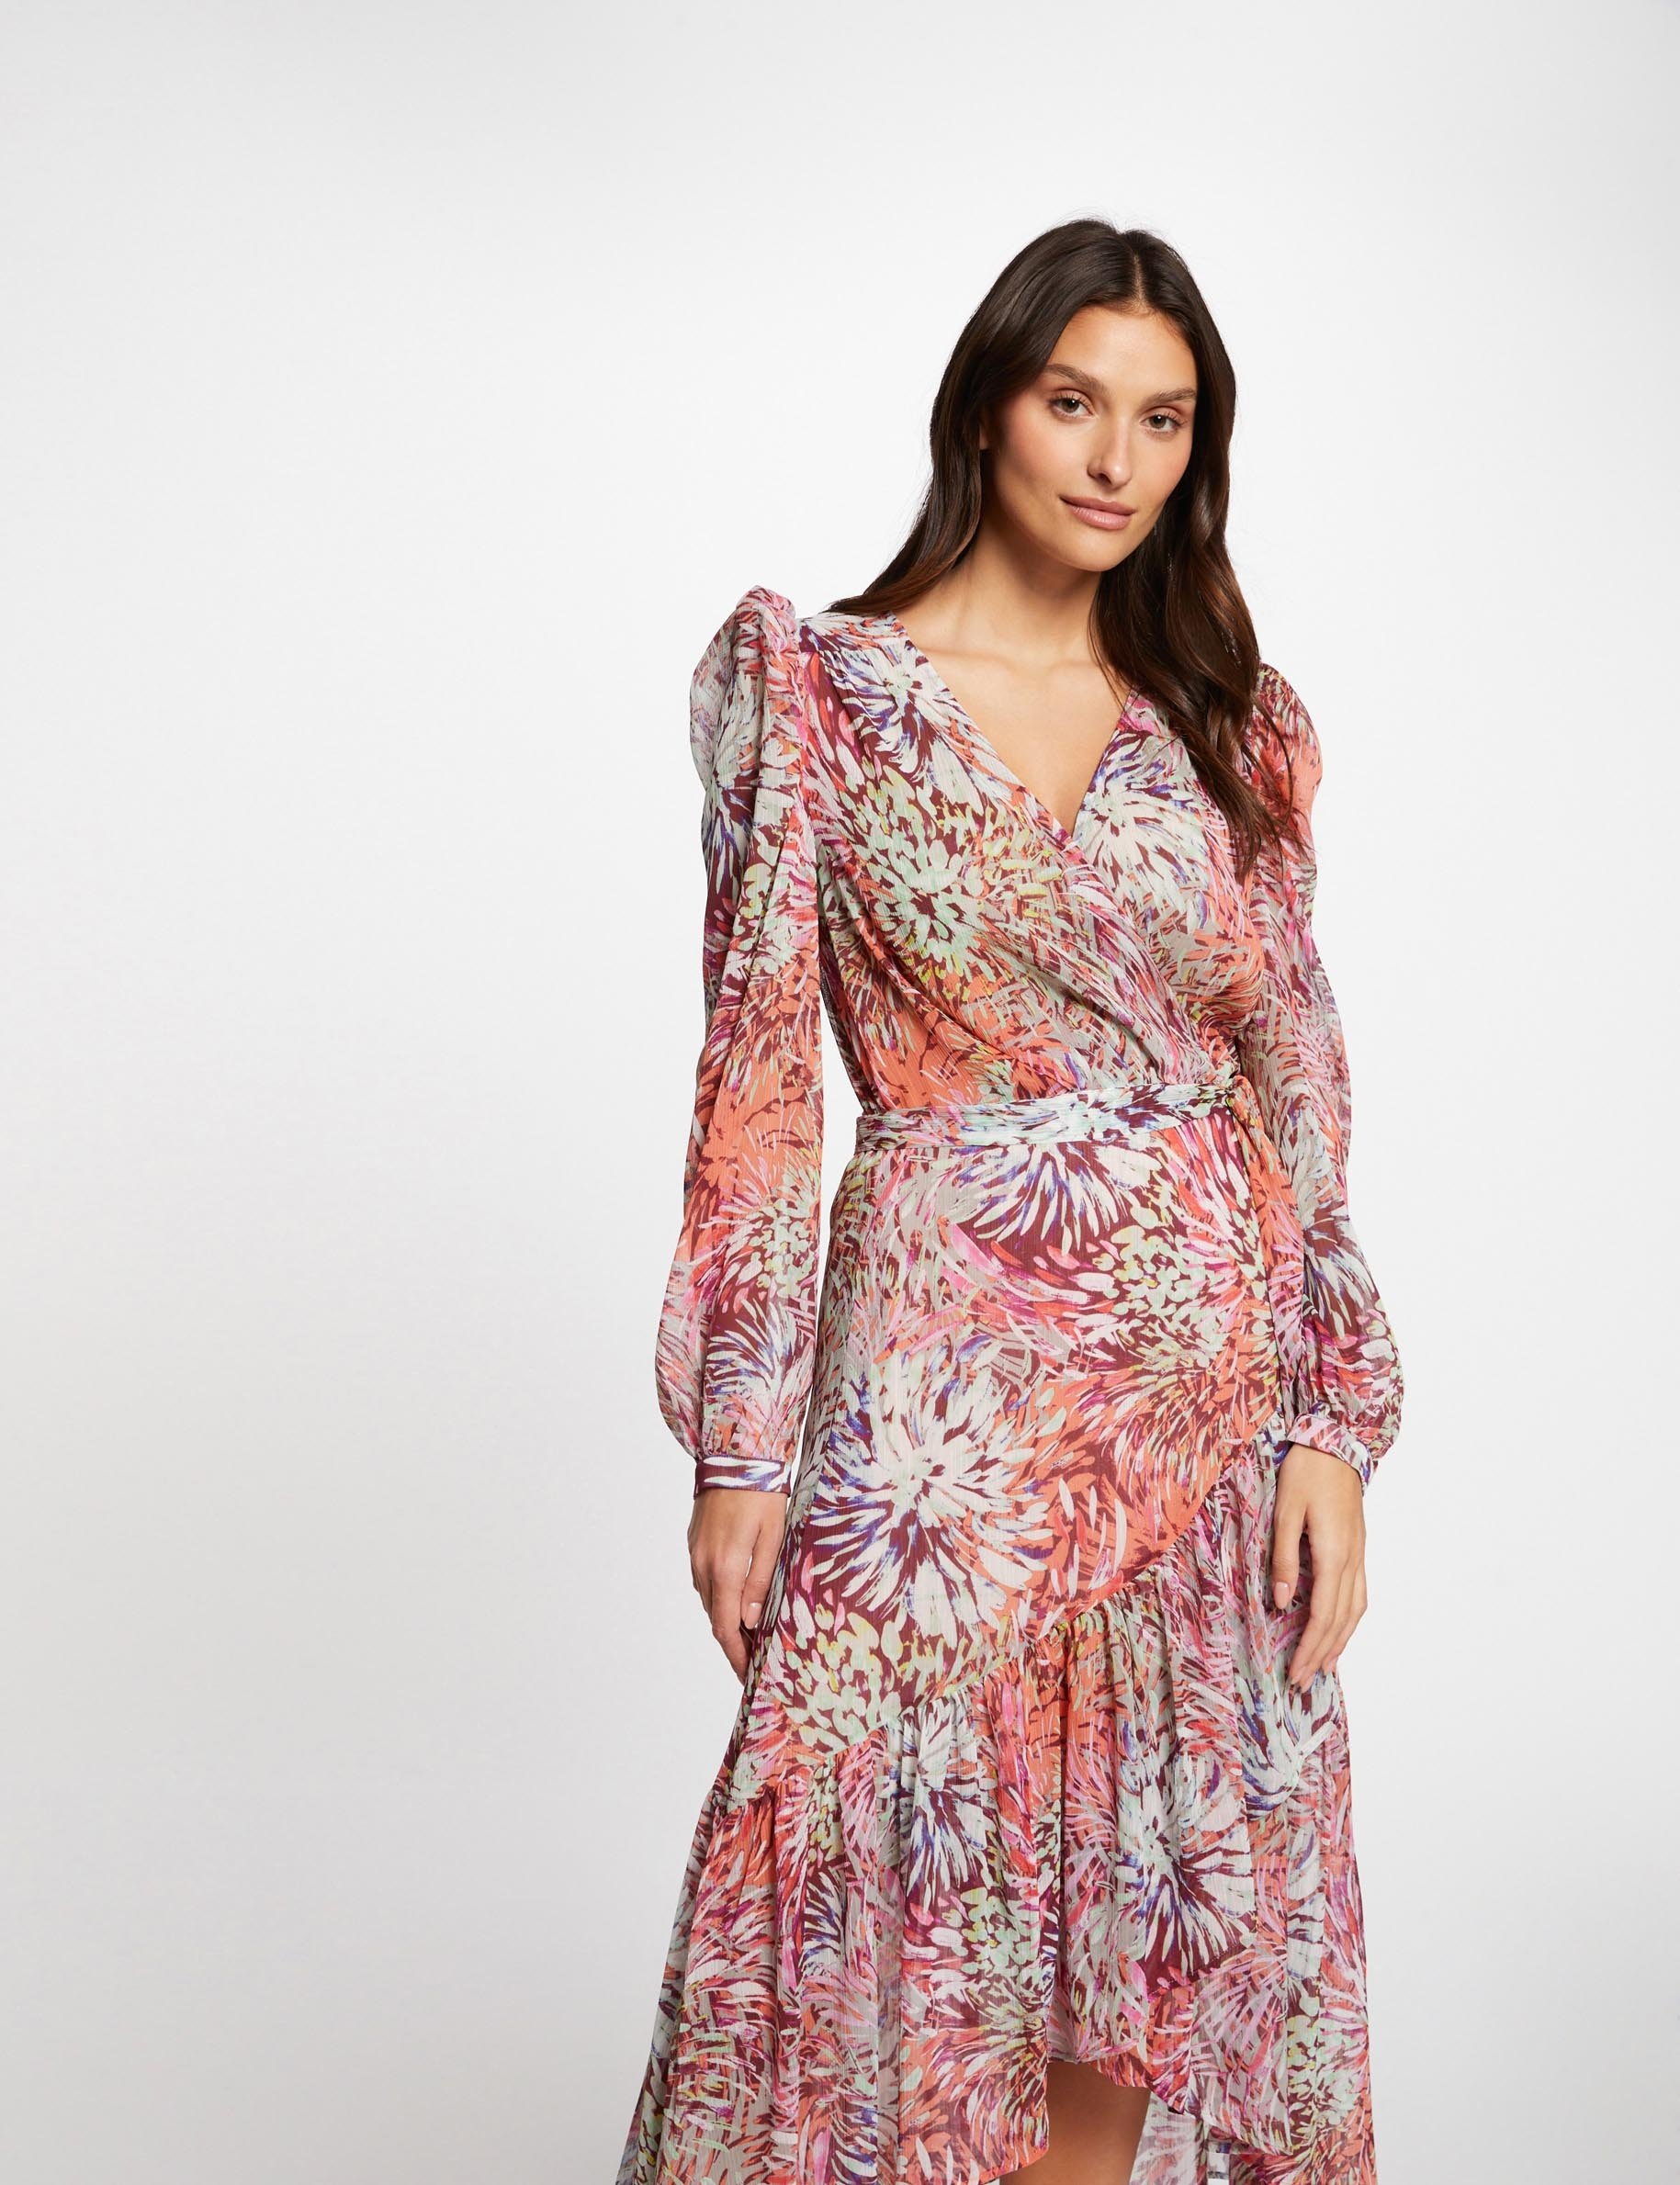 Midi-jurk overslag met print meerkleurig vrouw